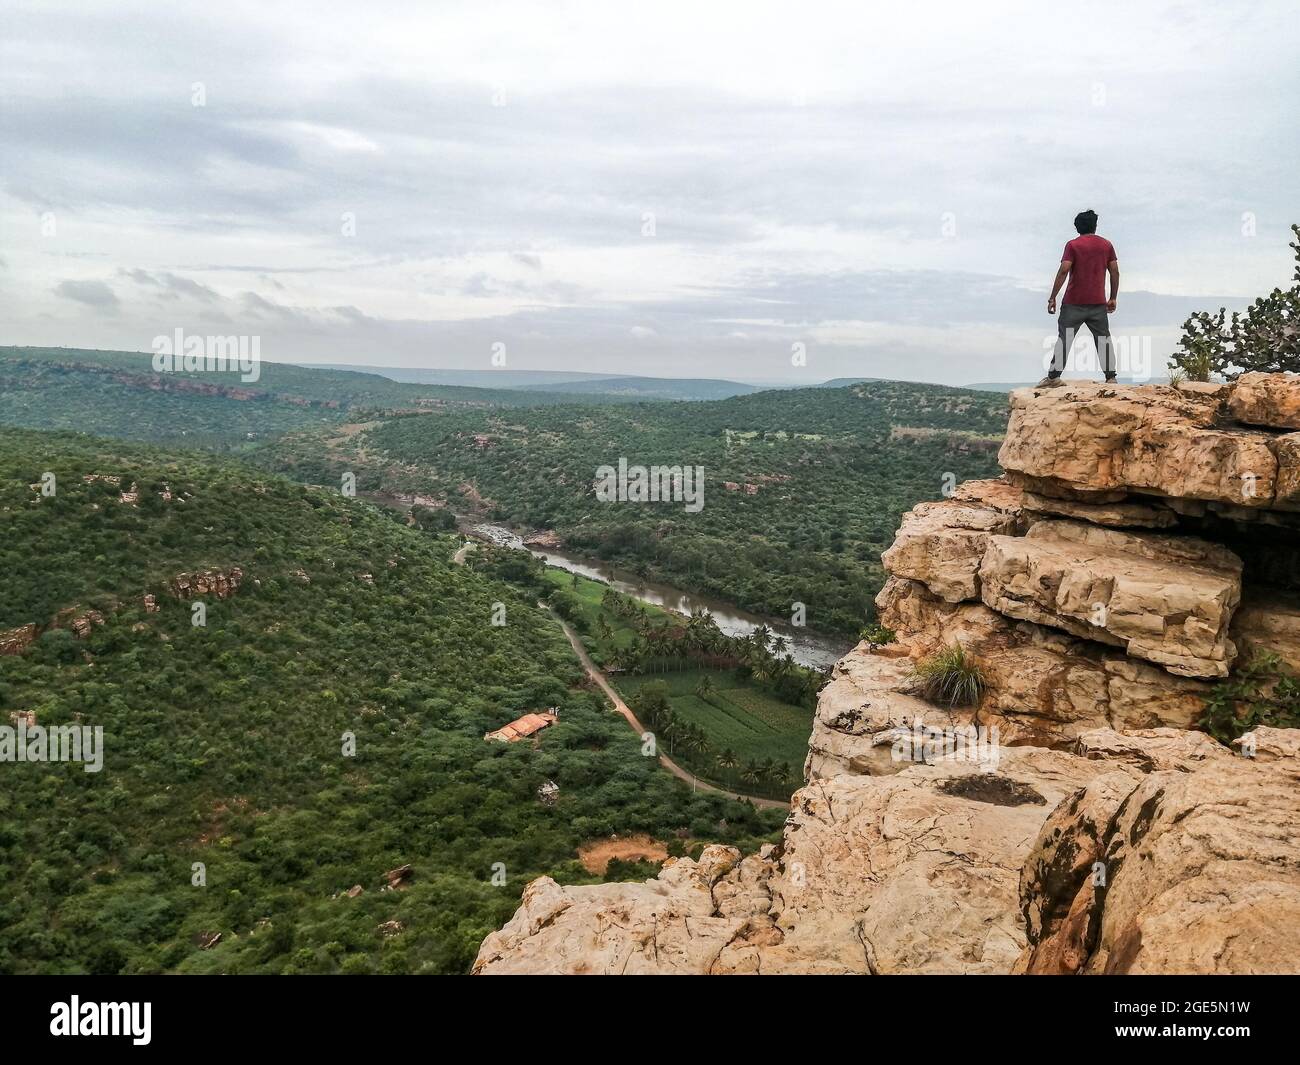 29 July 2020 Markandeya Valley, Gokak, Karnataka, India : Person standing on mountain top overlooking the Markandeya Valley, Stock Photo